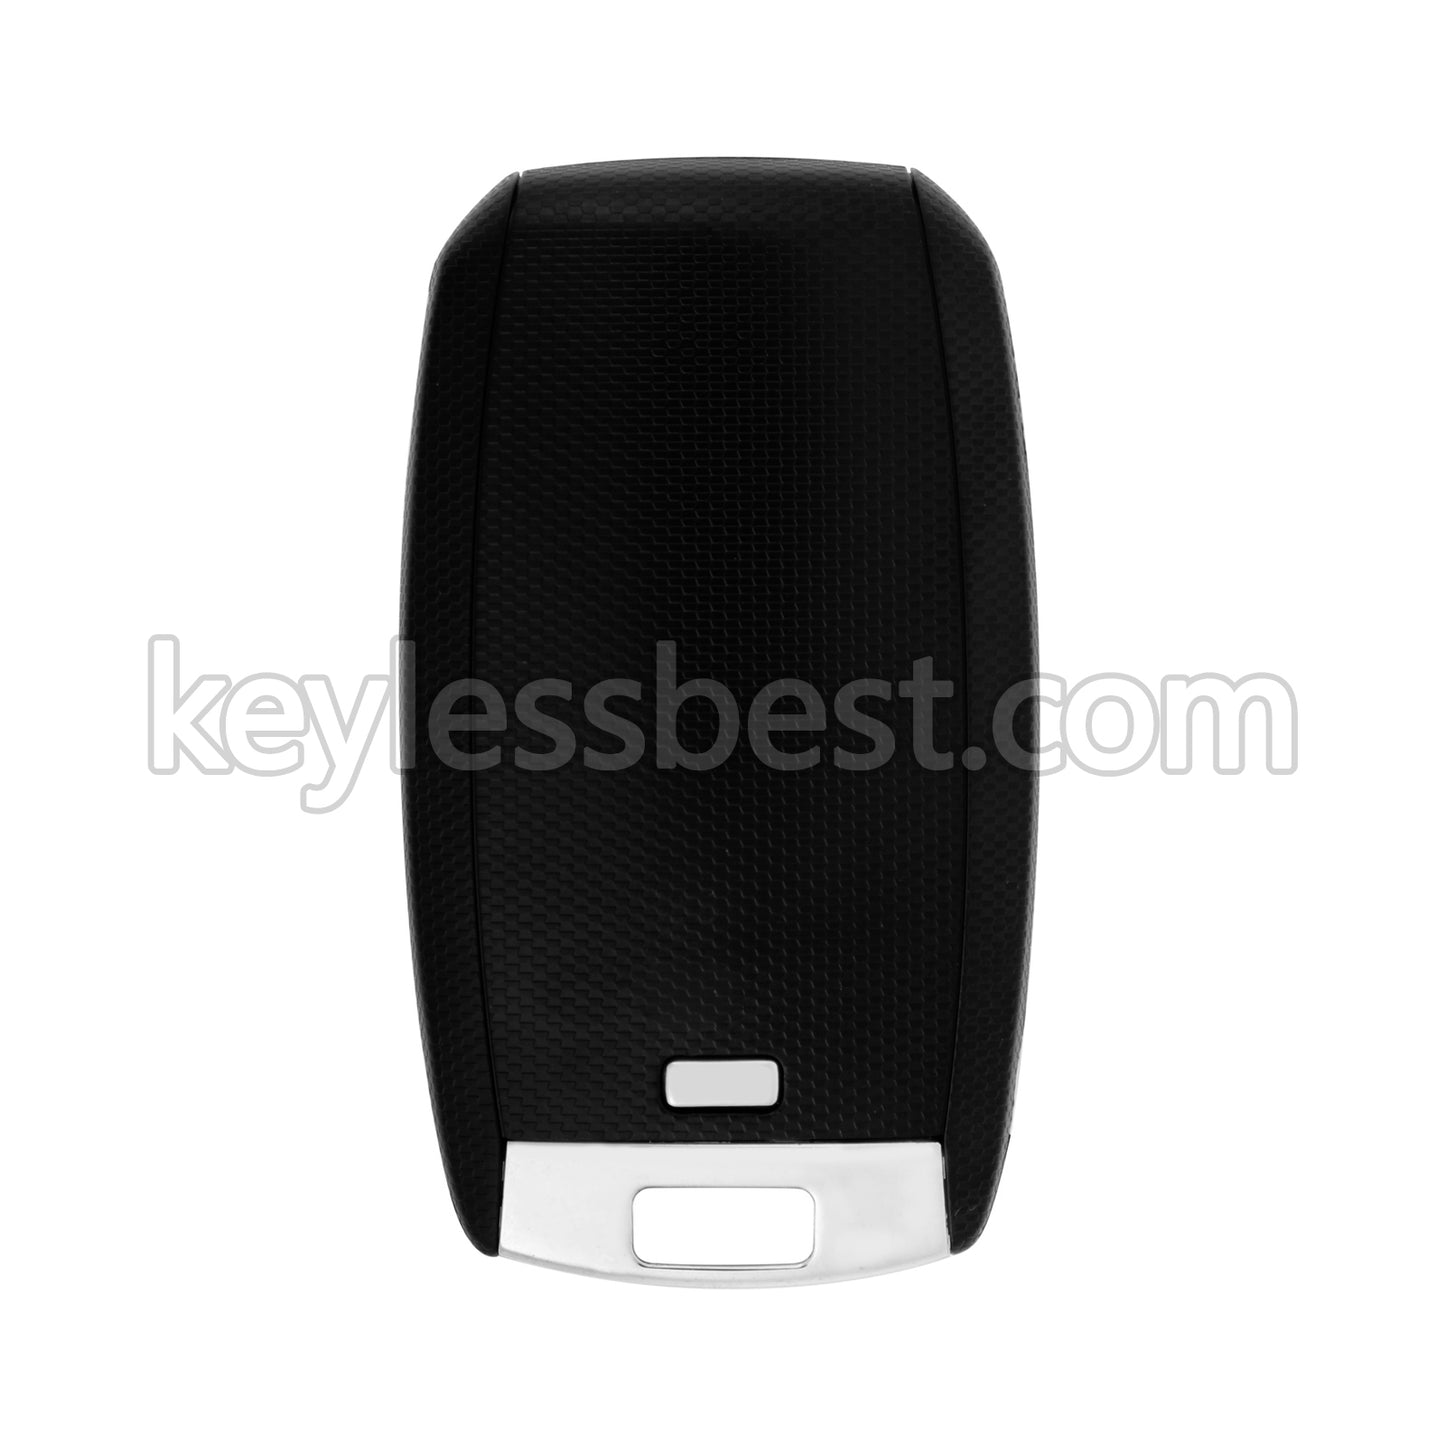 2015-2018 Kia Sorento / 4 Buttons Remote Key / TQ8-FOB-4F06 / 433.92MHz